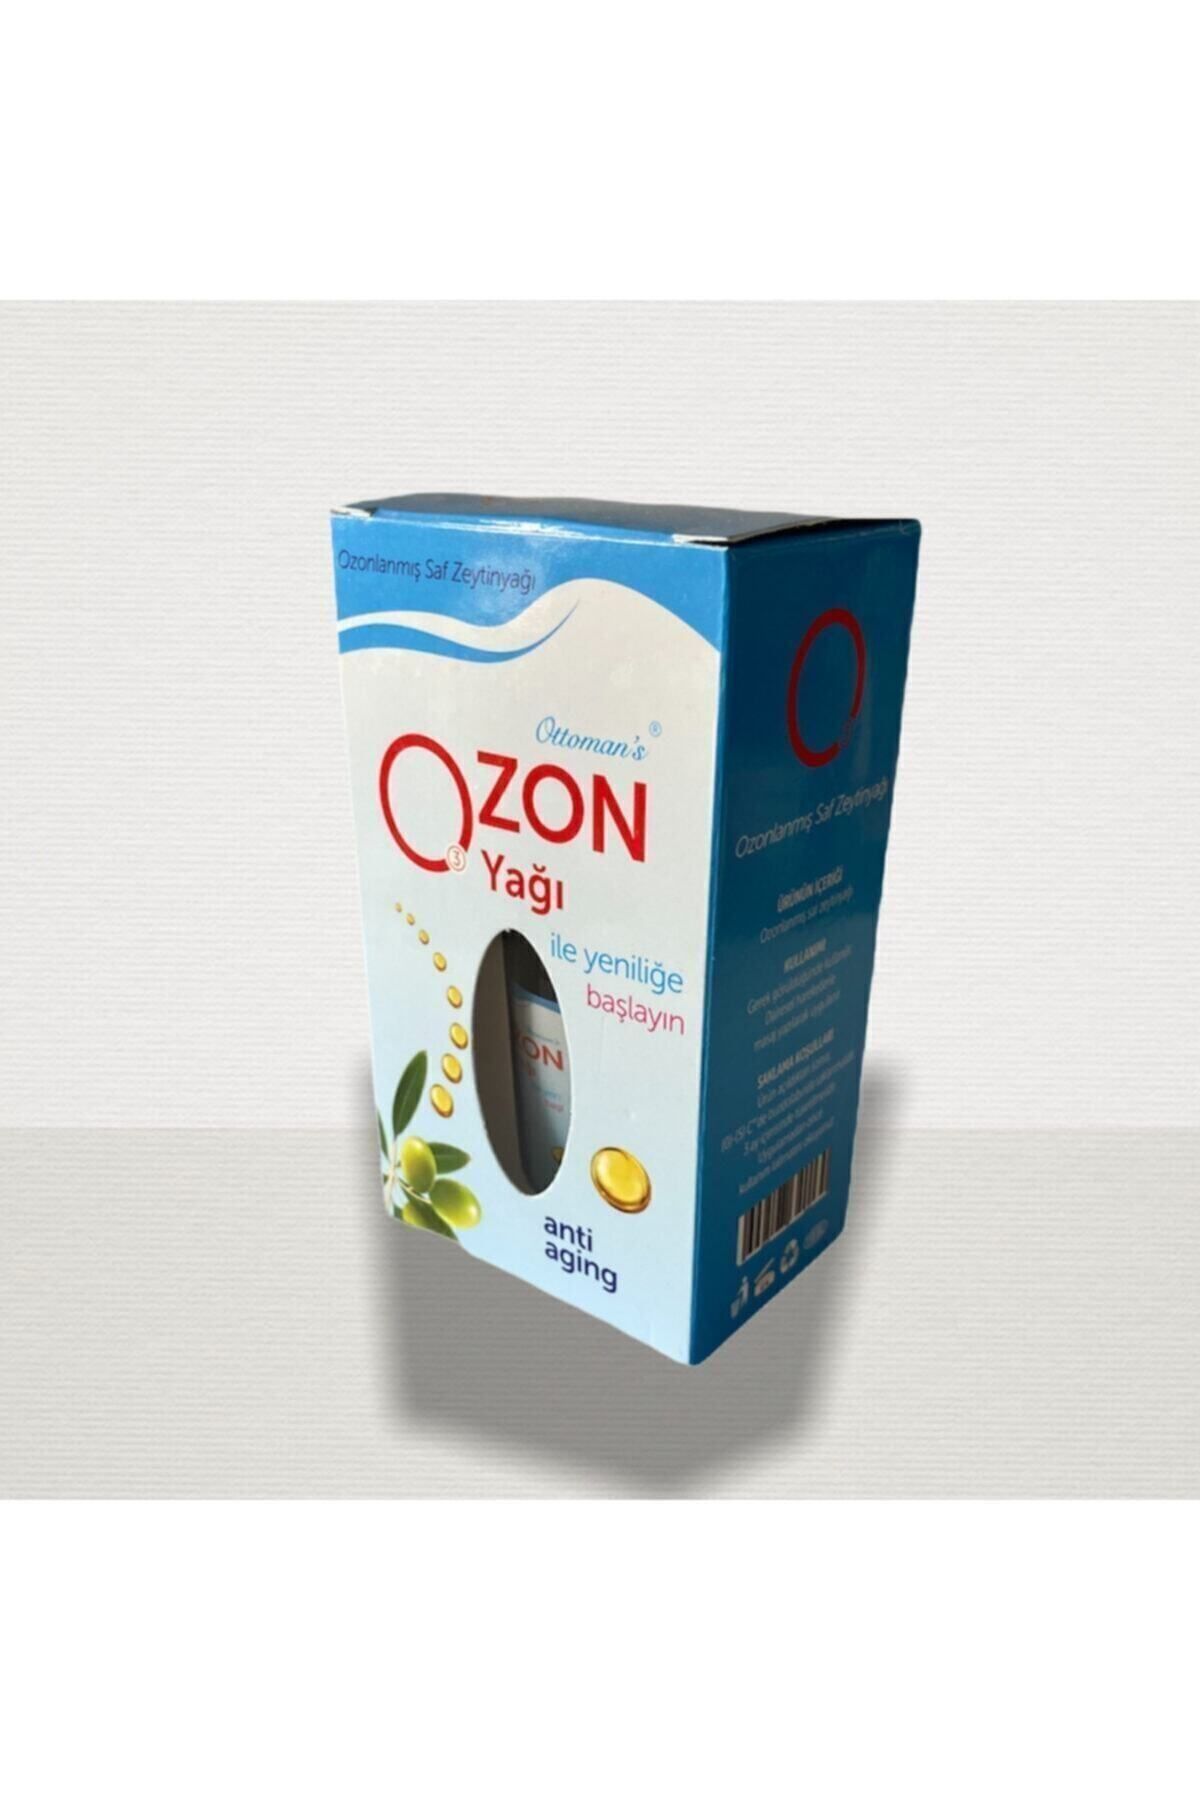 Ottoman's Ozon Yagi 50 ml Anti Aging